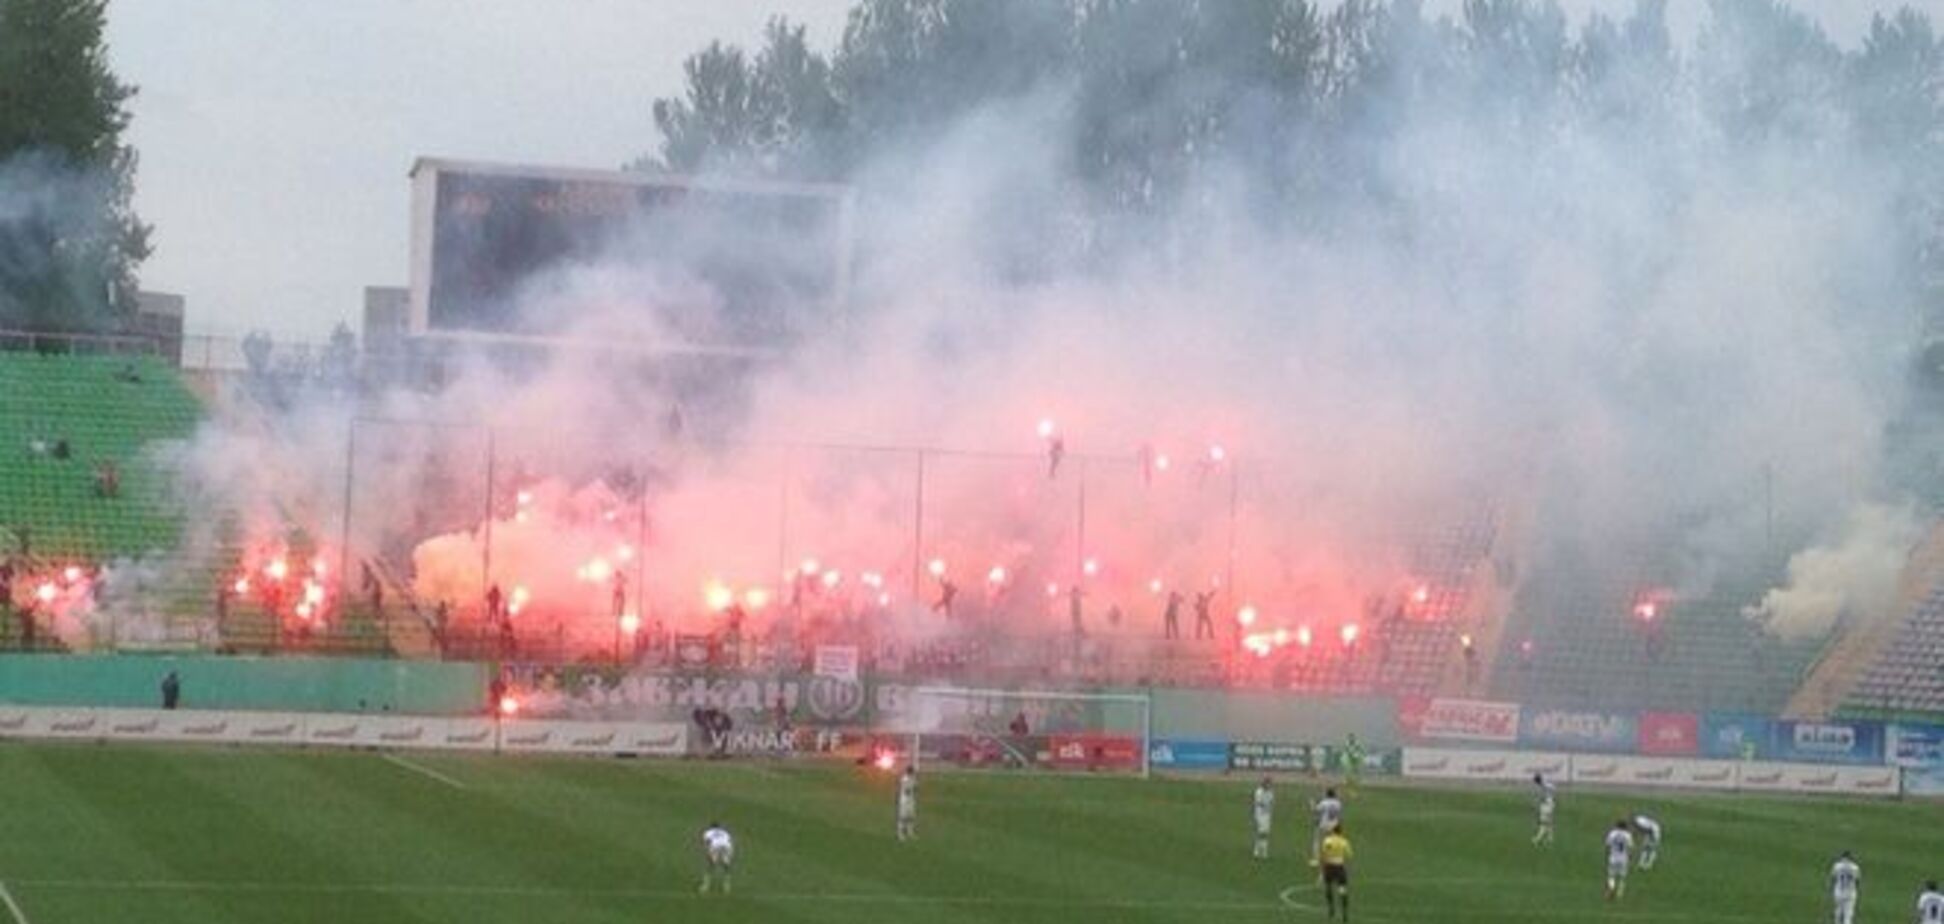 Фанаты 'Карпат' едва не сожгли стадион во время матча: видео инцидента